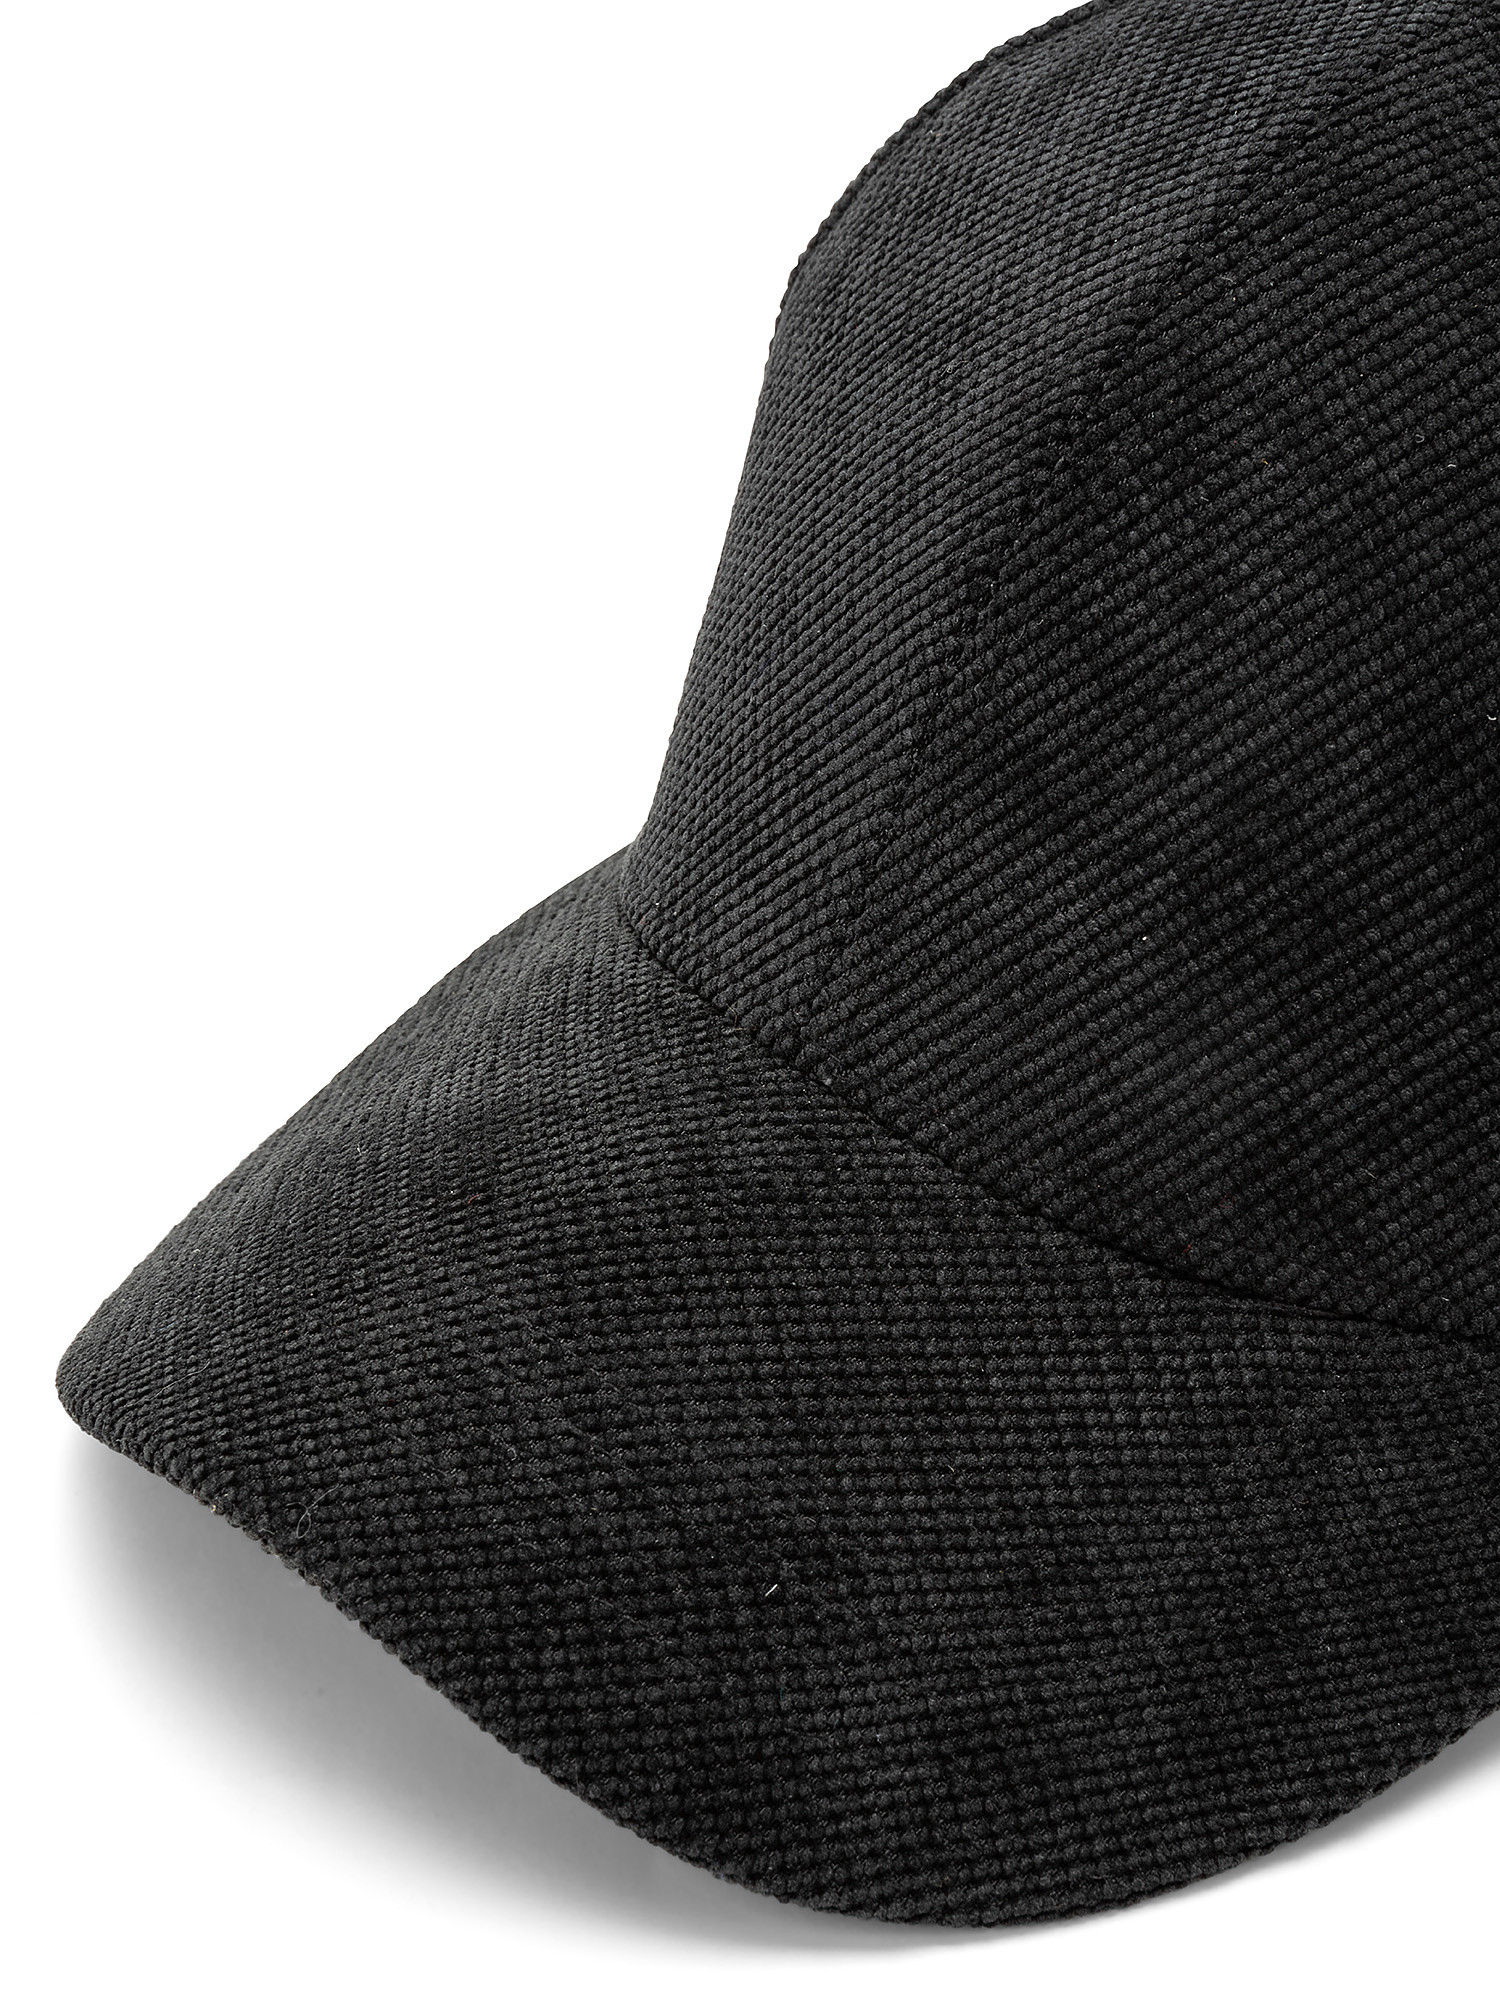 Baseball cap, Black, large image number 1